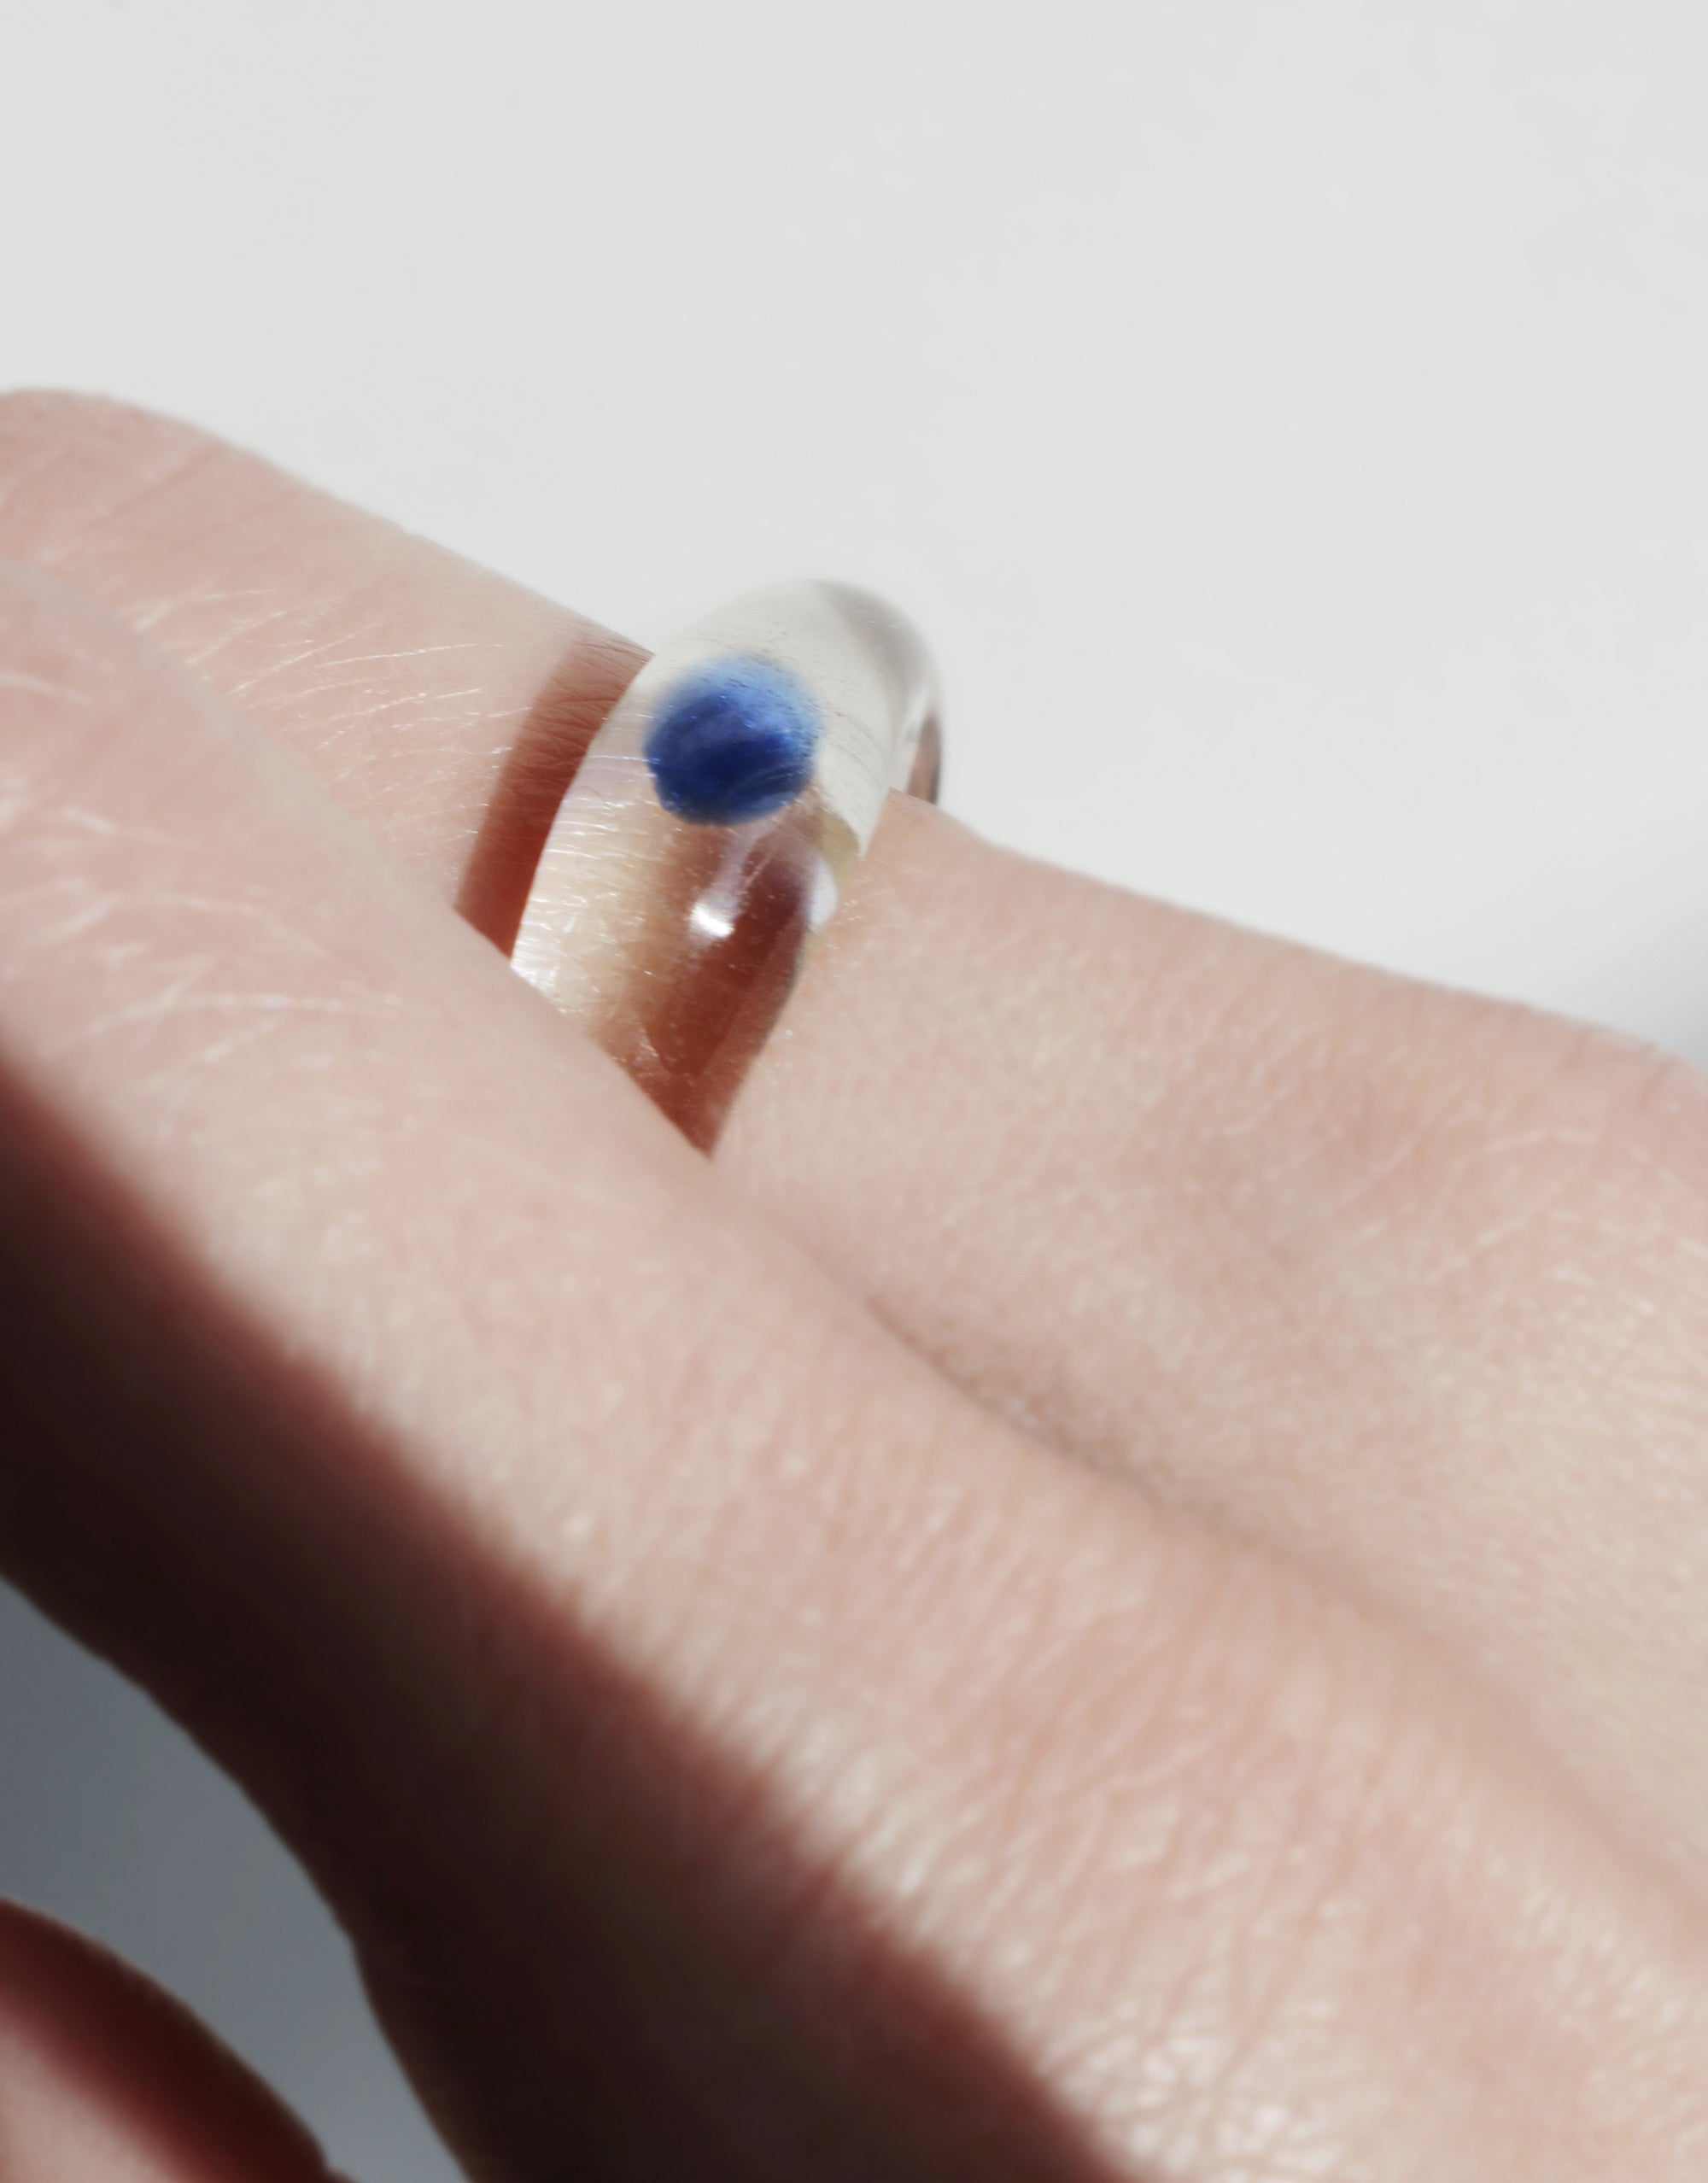 Blue Moon Ring